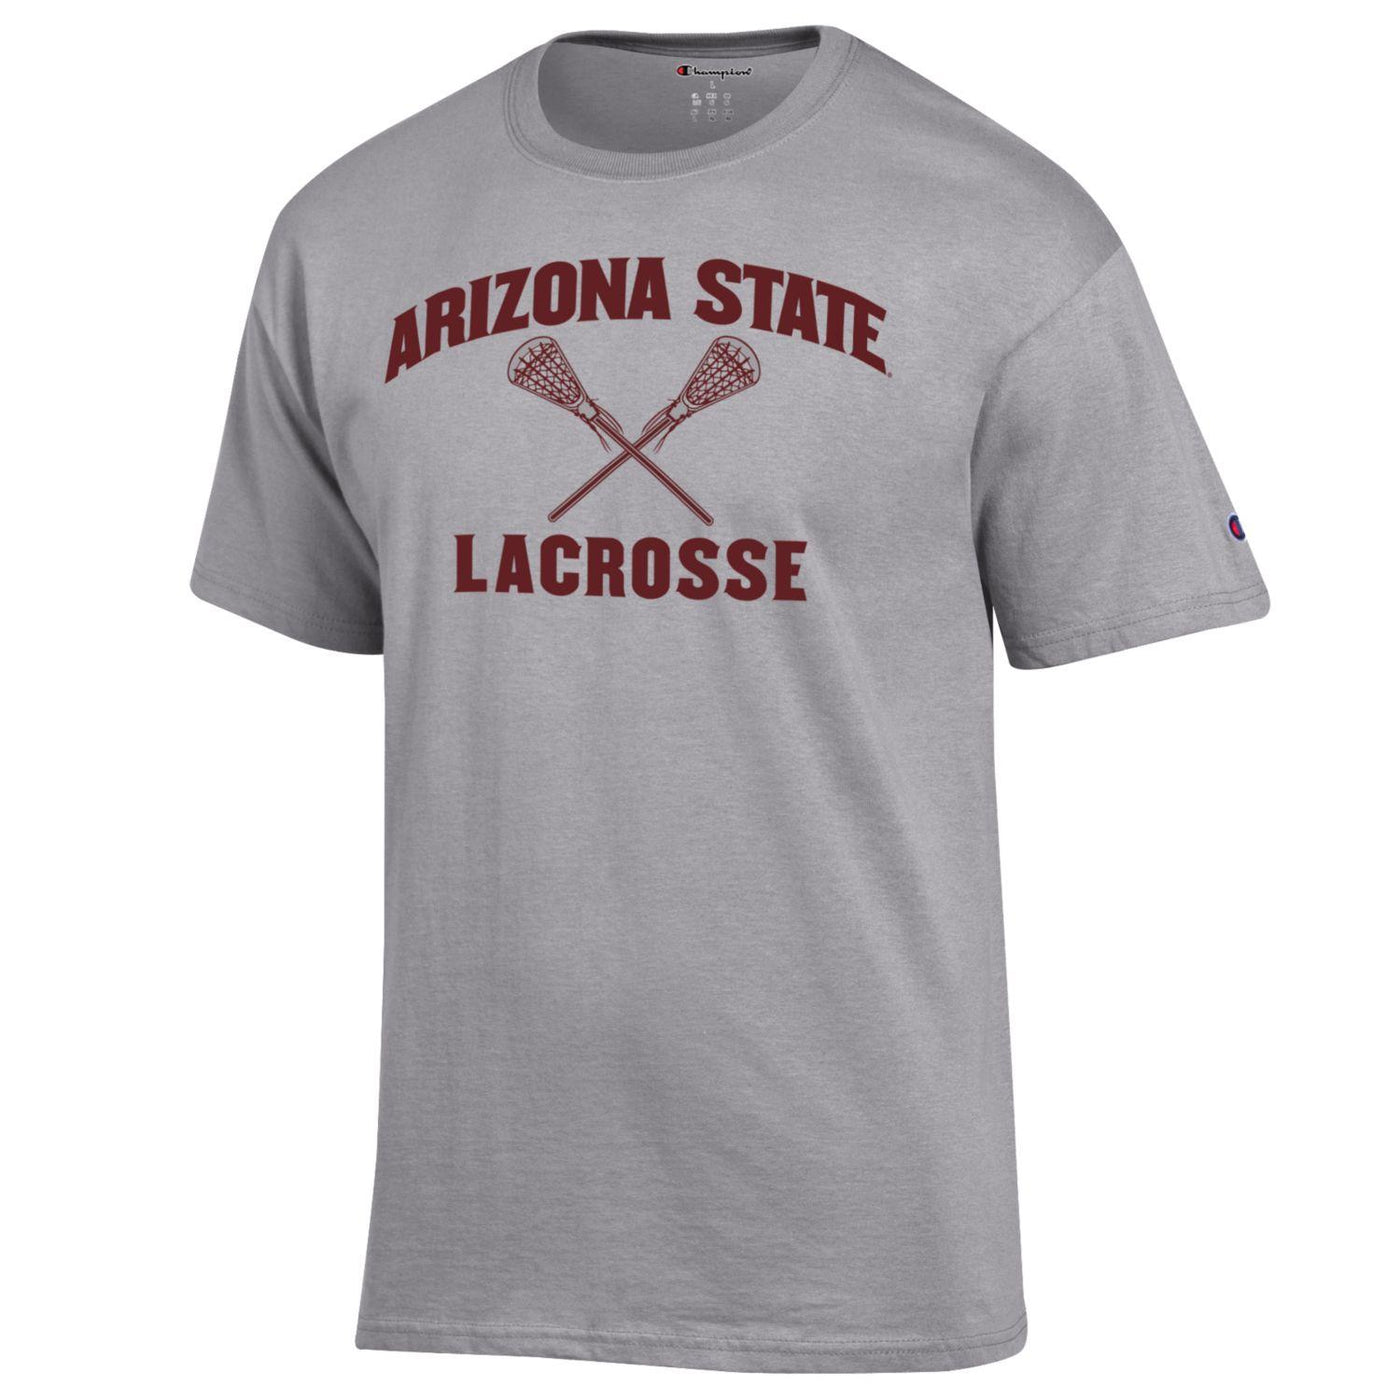 ASU gray tee with 'Arizona State Lacrosse' lettering surrounding 2 crossed lacrosse sticks